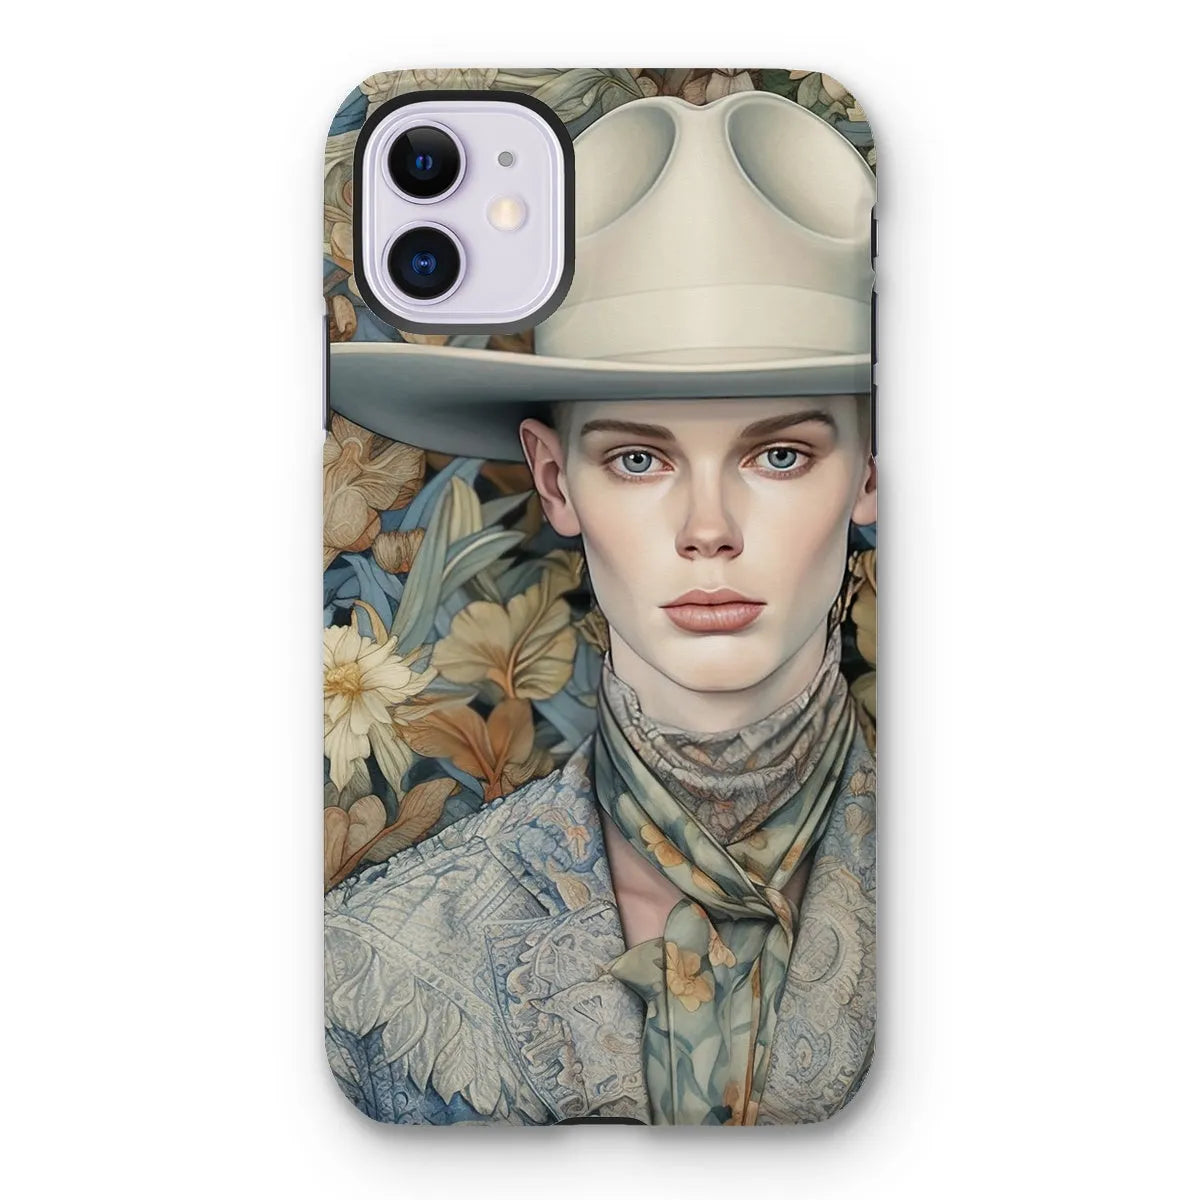 Jasper The Gay Cowboy - Dandy Gay Aesthetic Art Phone Case - Iphone 11 / Matte - Mobile Phone Cases - Aesthetic Art